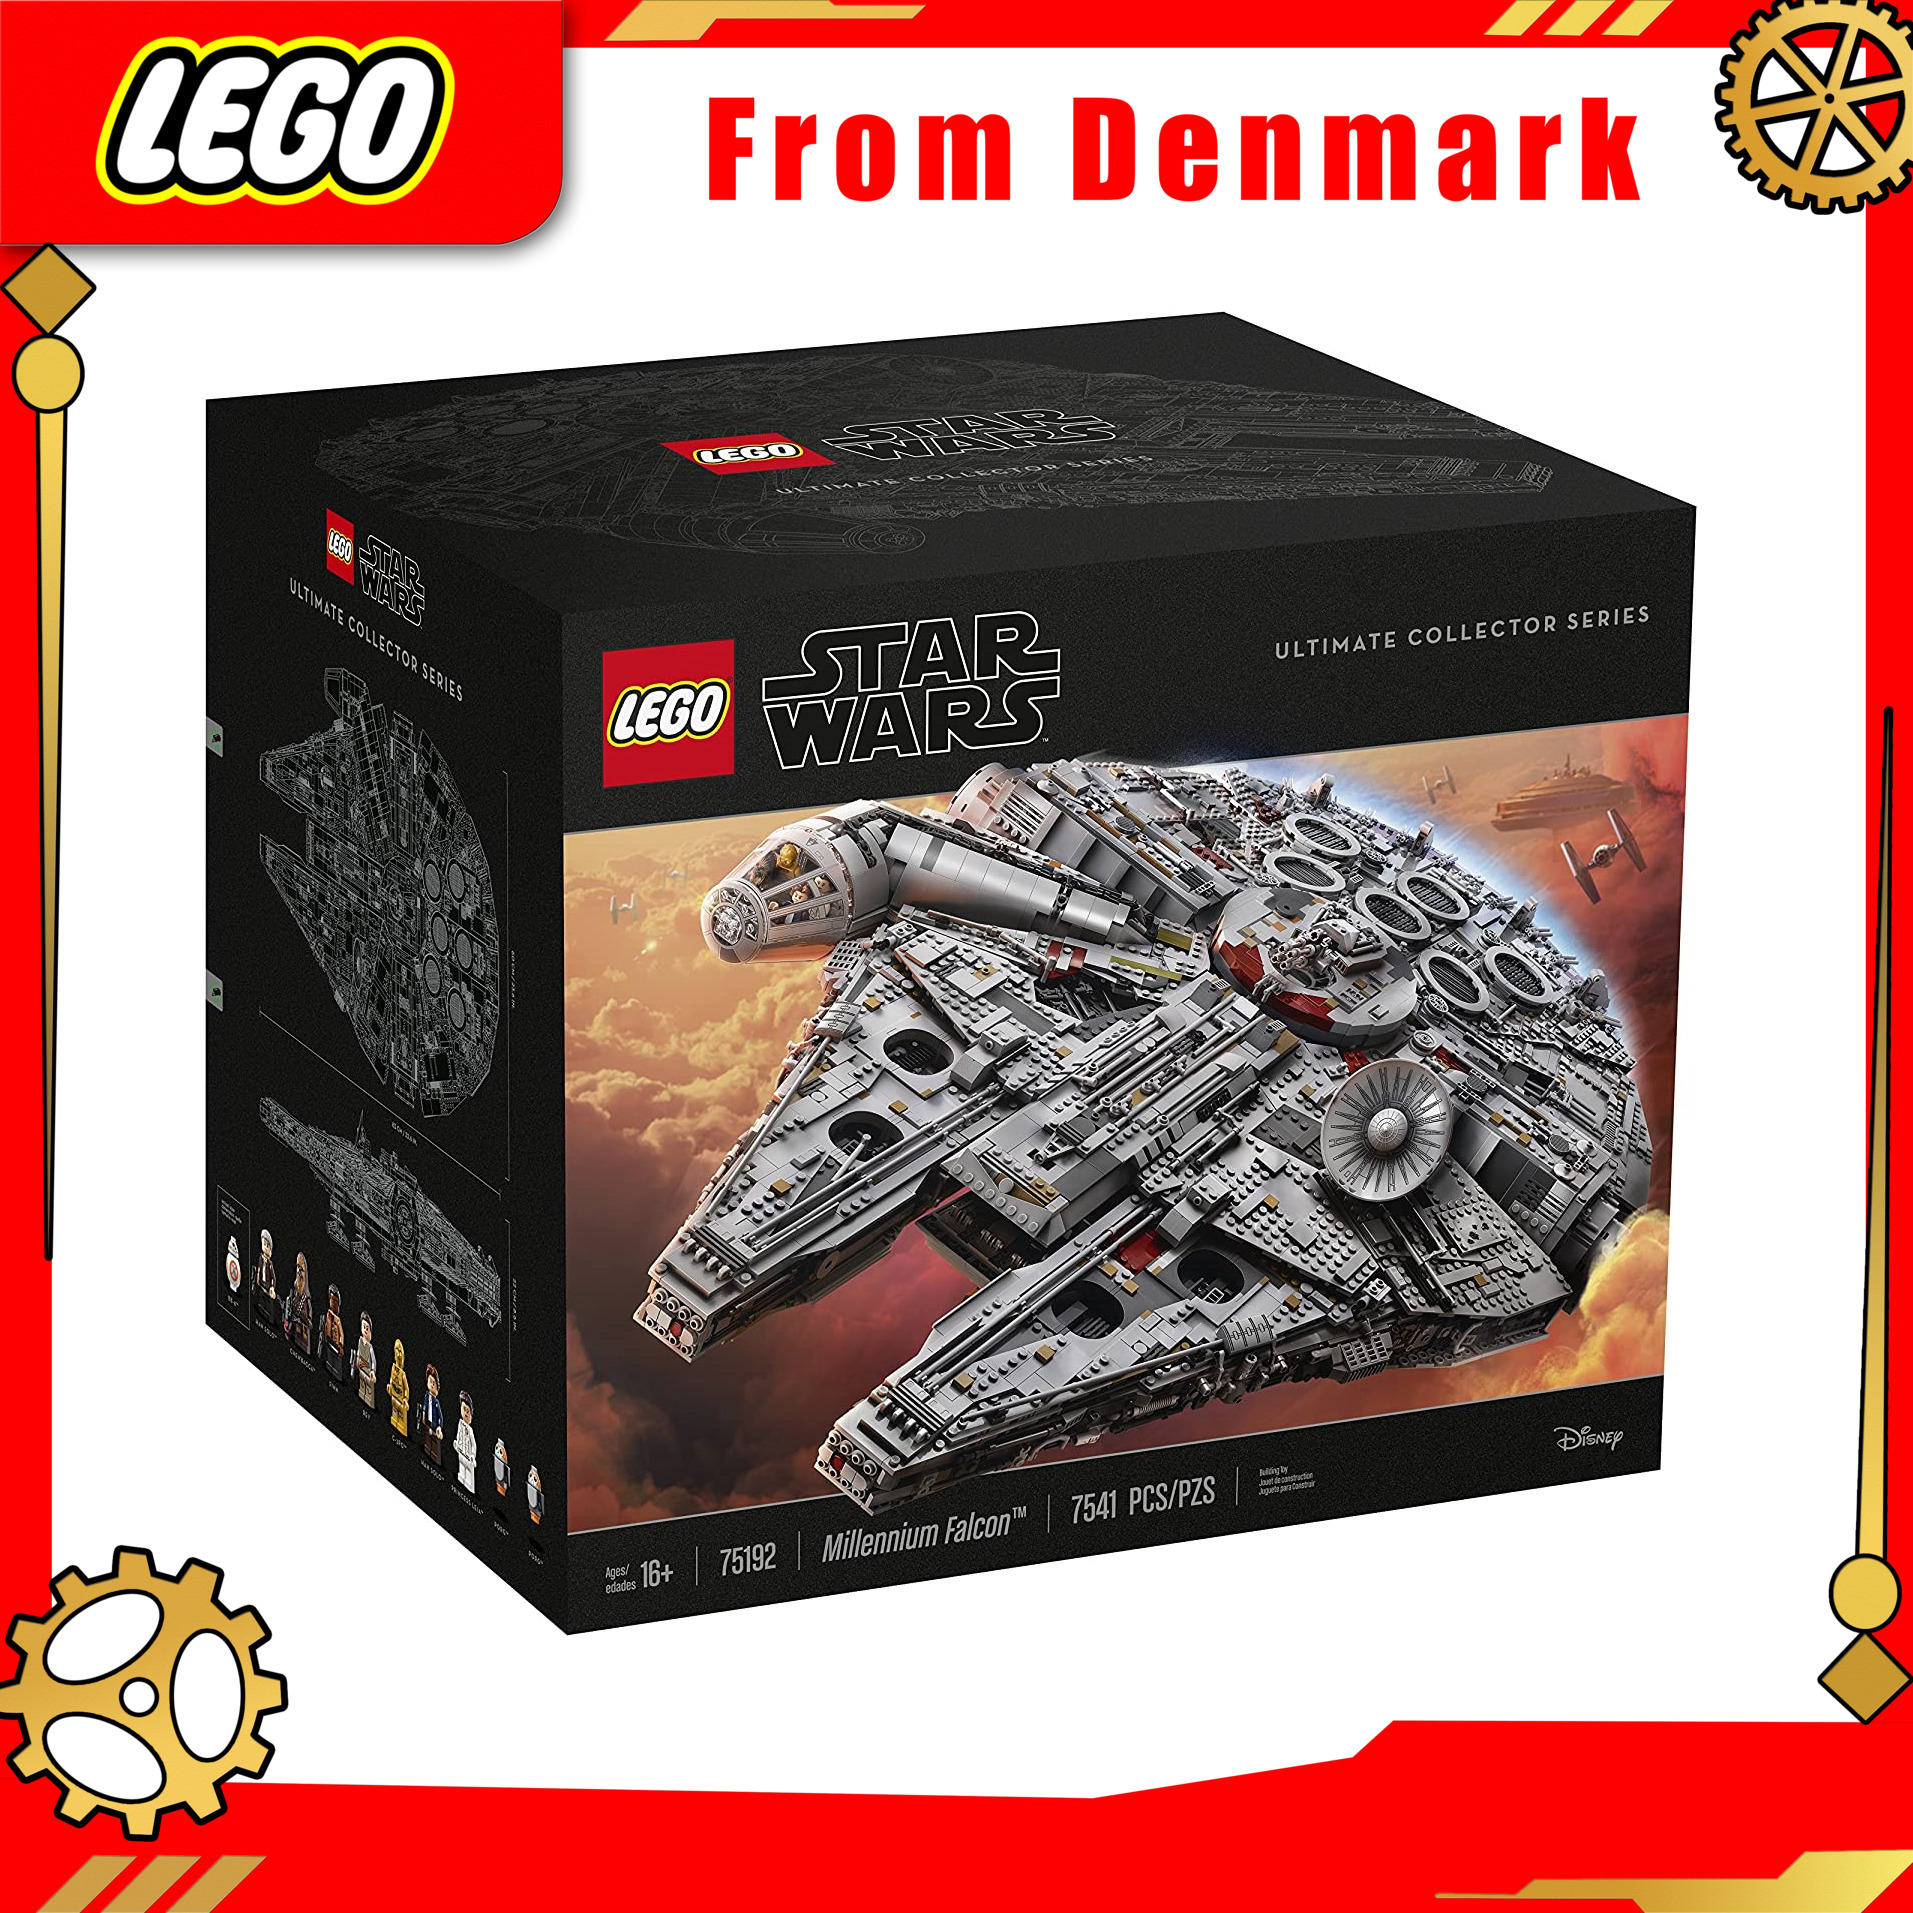 【From Denmark】LEGO Disney Star Wars Millennium Falcon 75192 genuine guaranteeFrom Denmark limited edition remaining stock 6